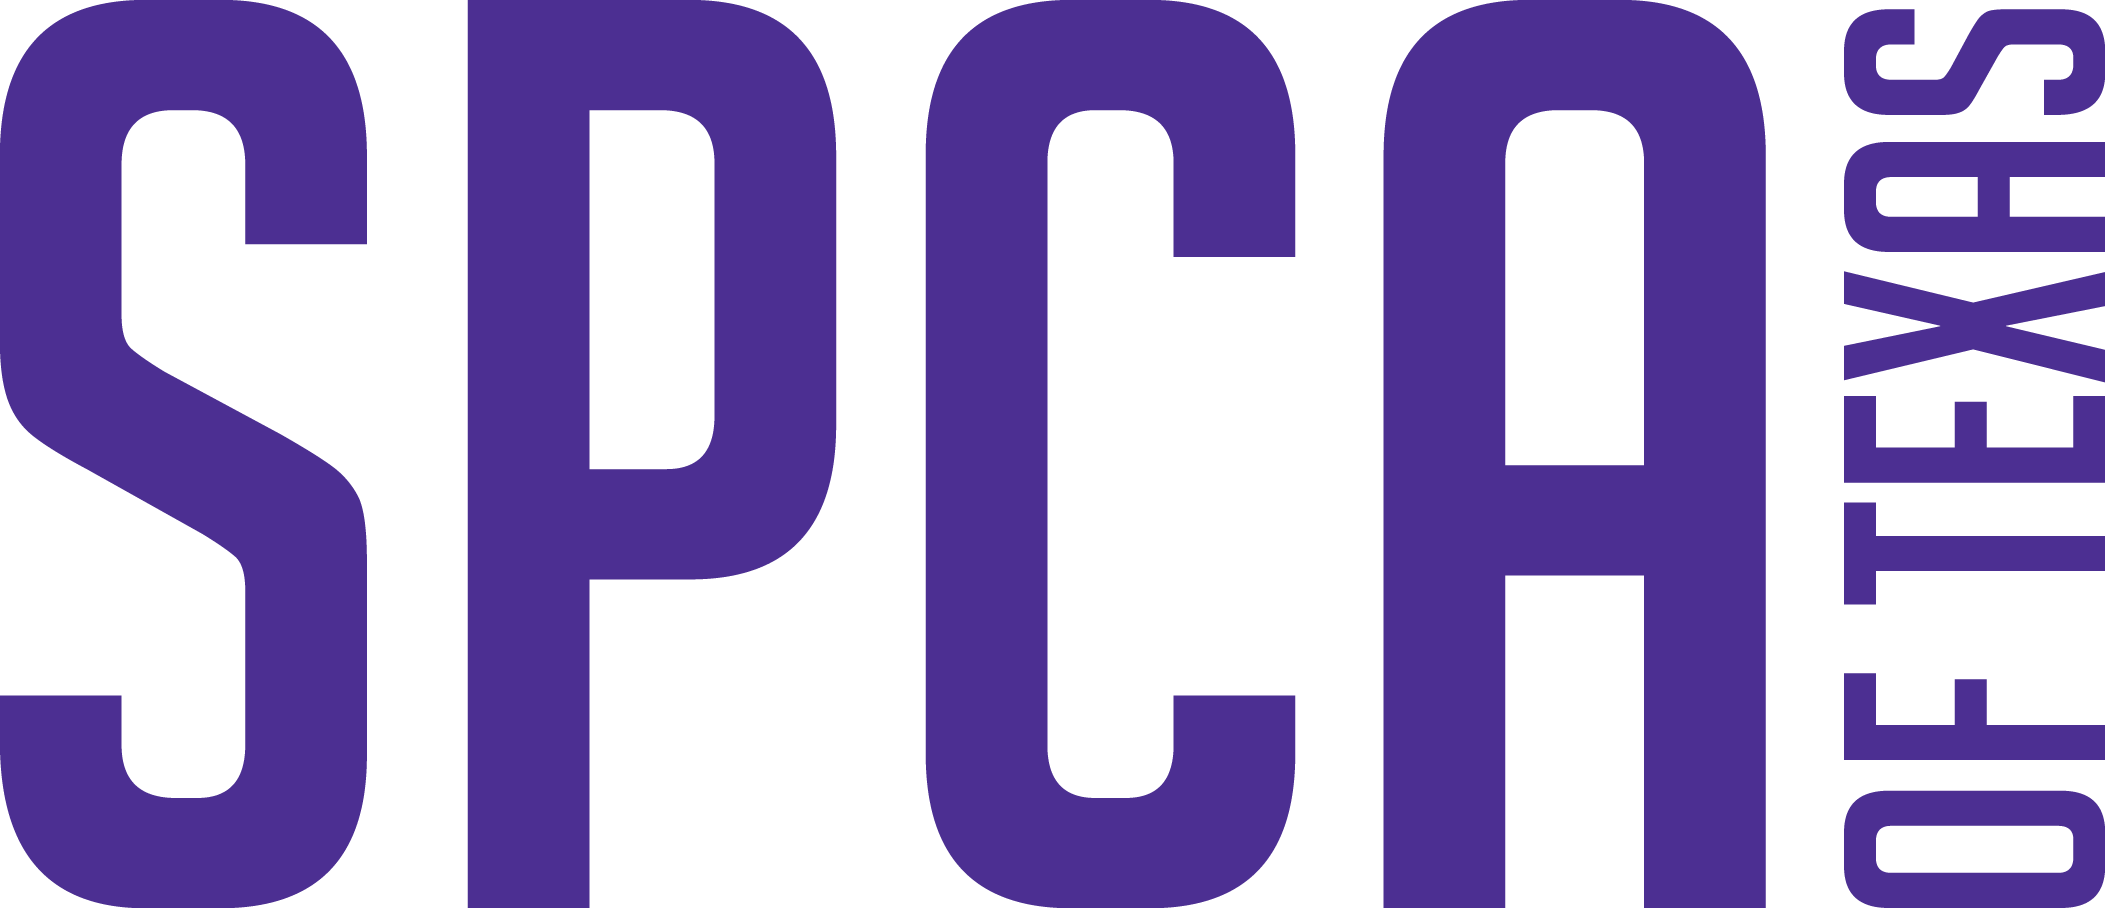 SPCA-logo_2017-purple.png